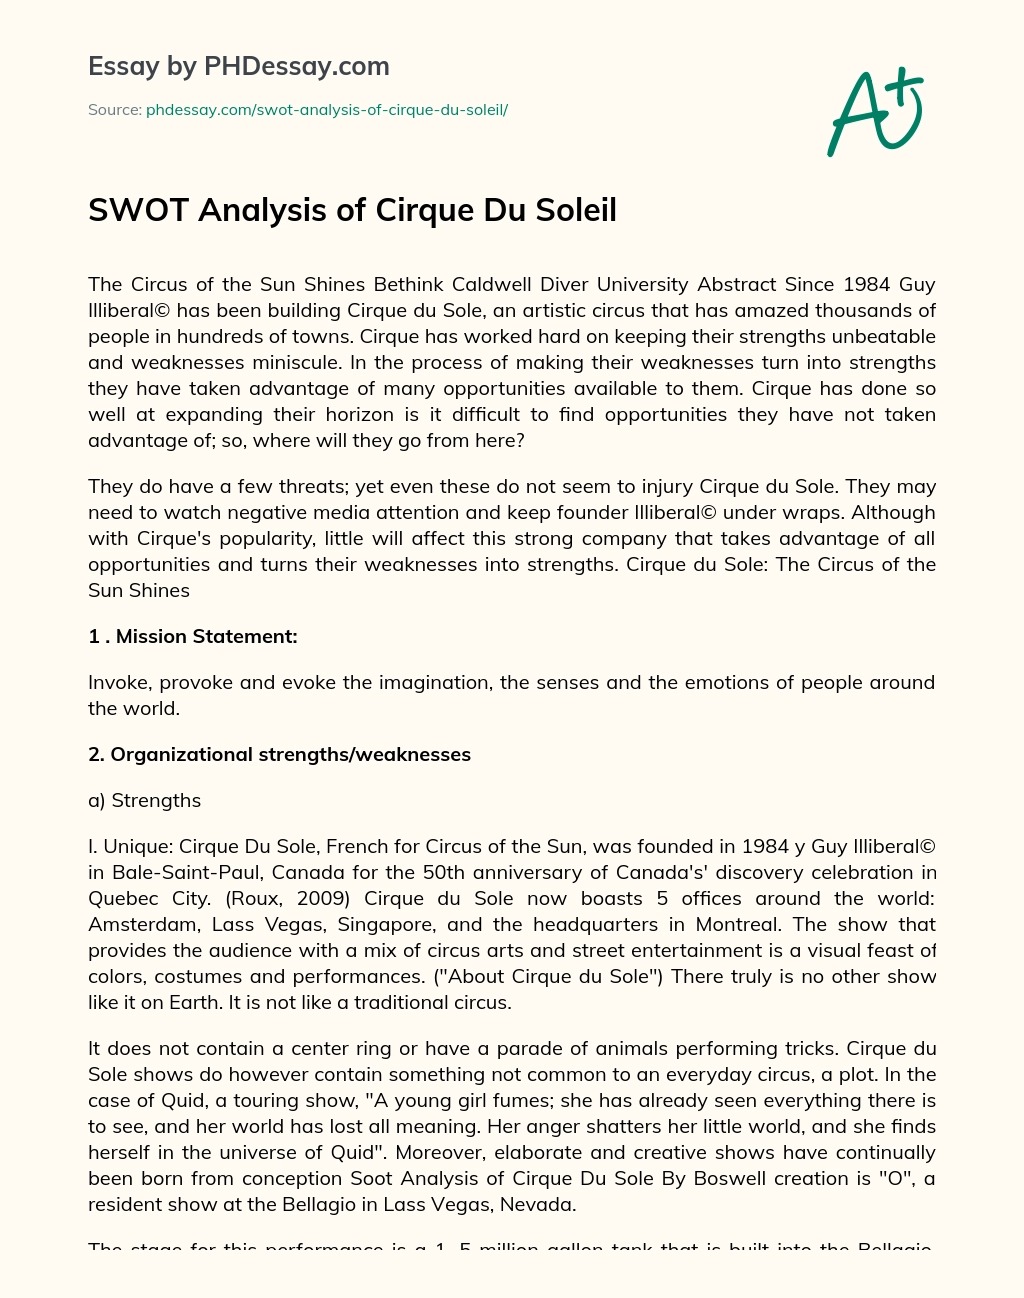 SWOT Analysis of Cirque Du Soleil essay